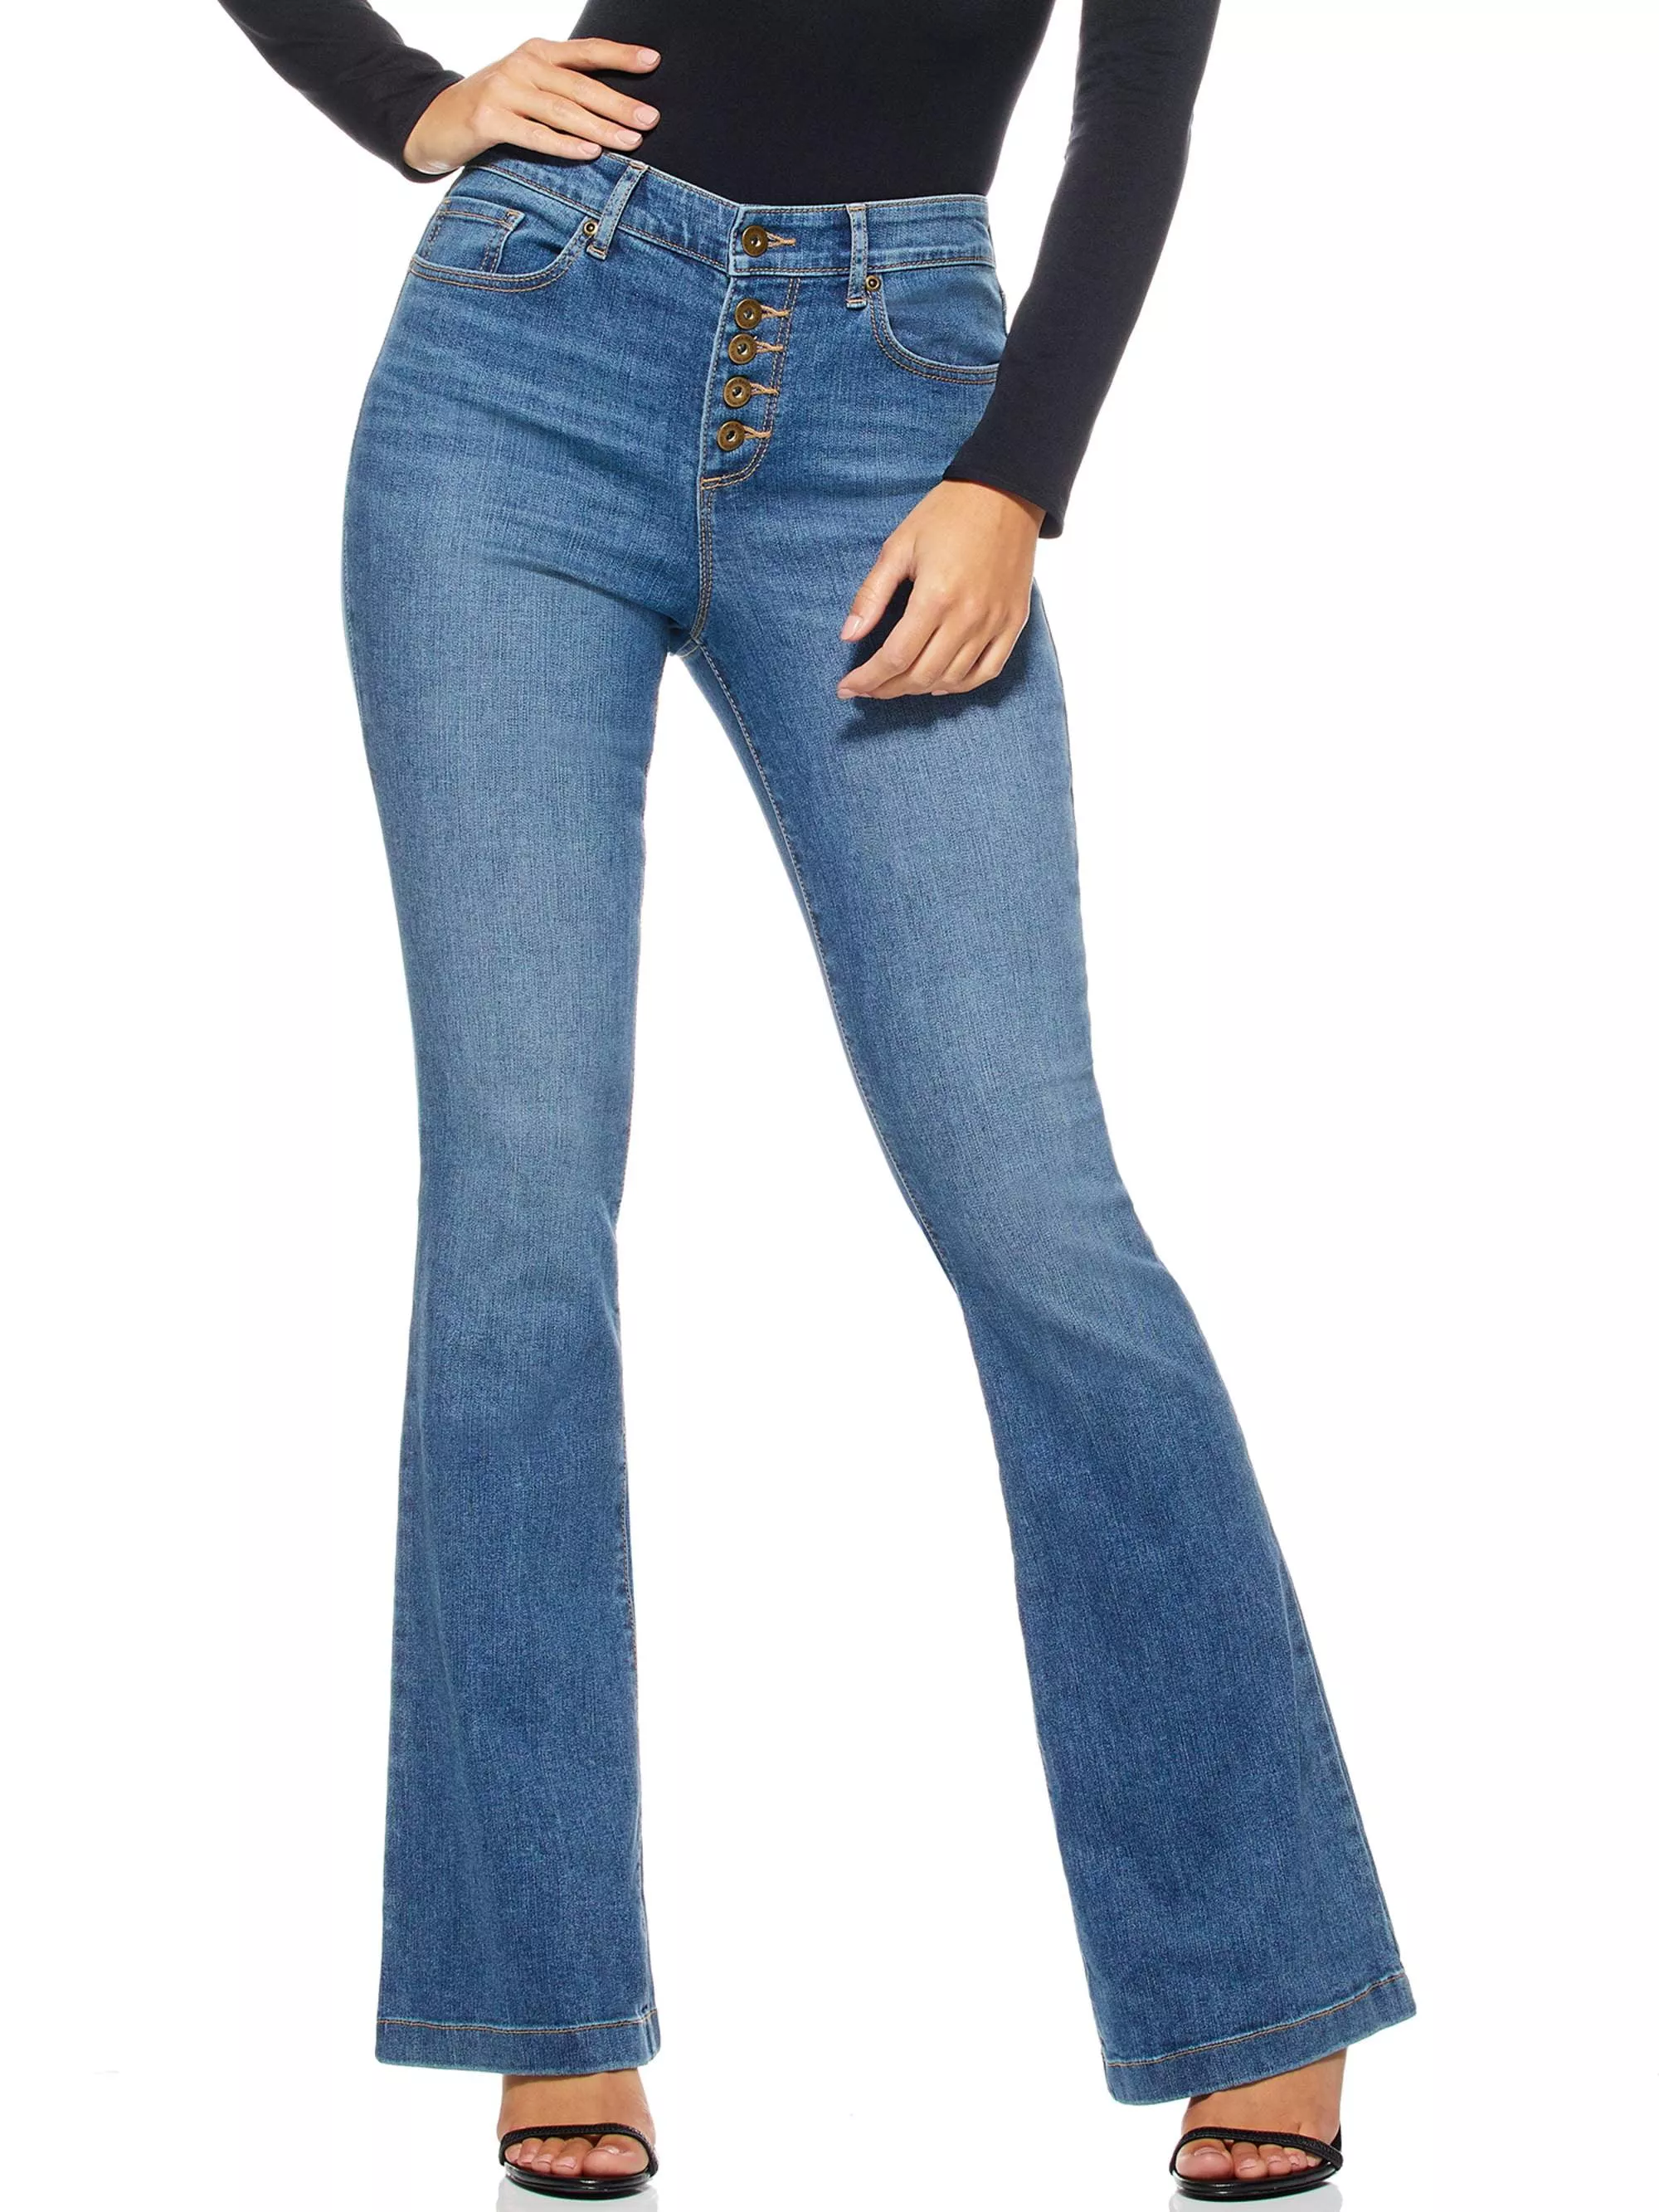 Sofia Jeans Melisa Flare Pull On High Waist Stretch Jean